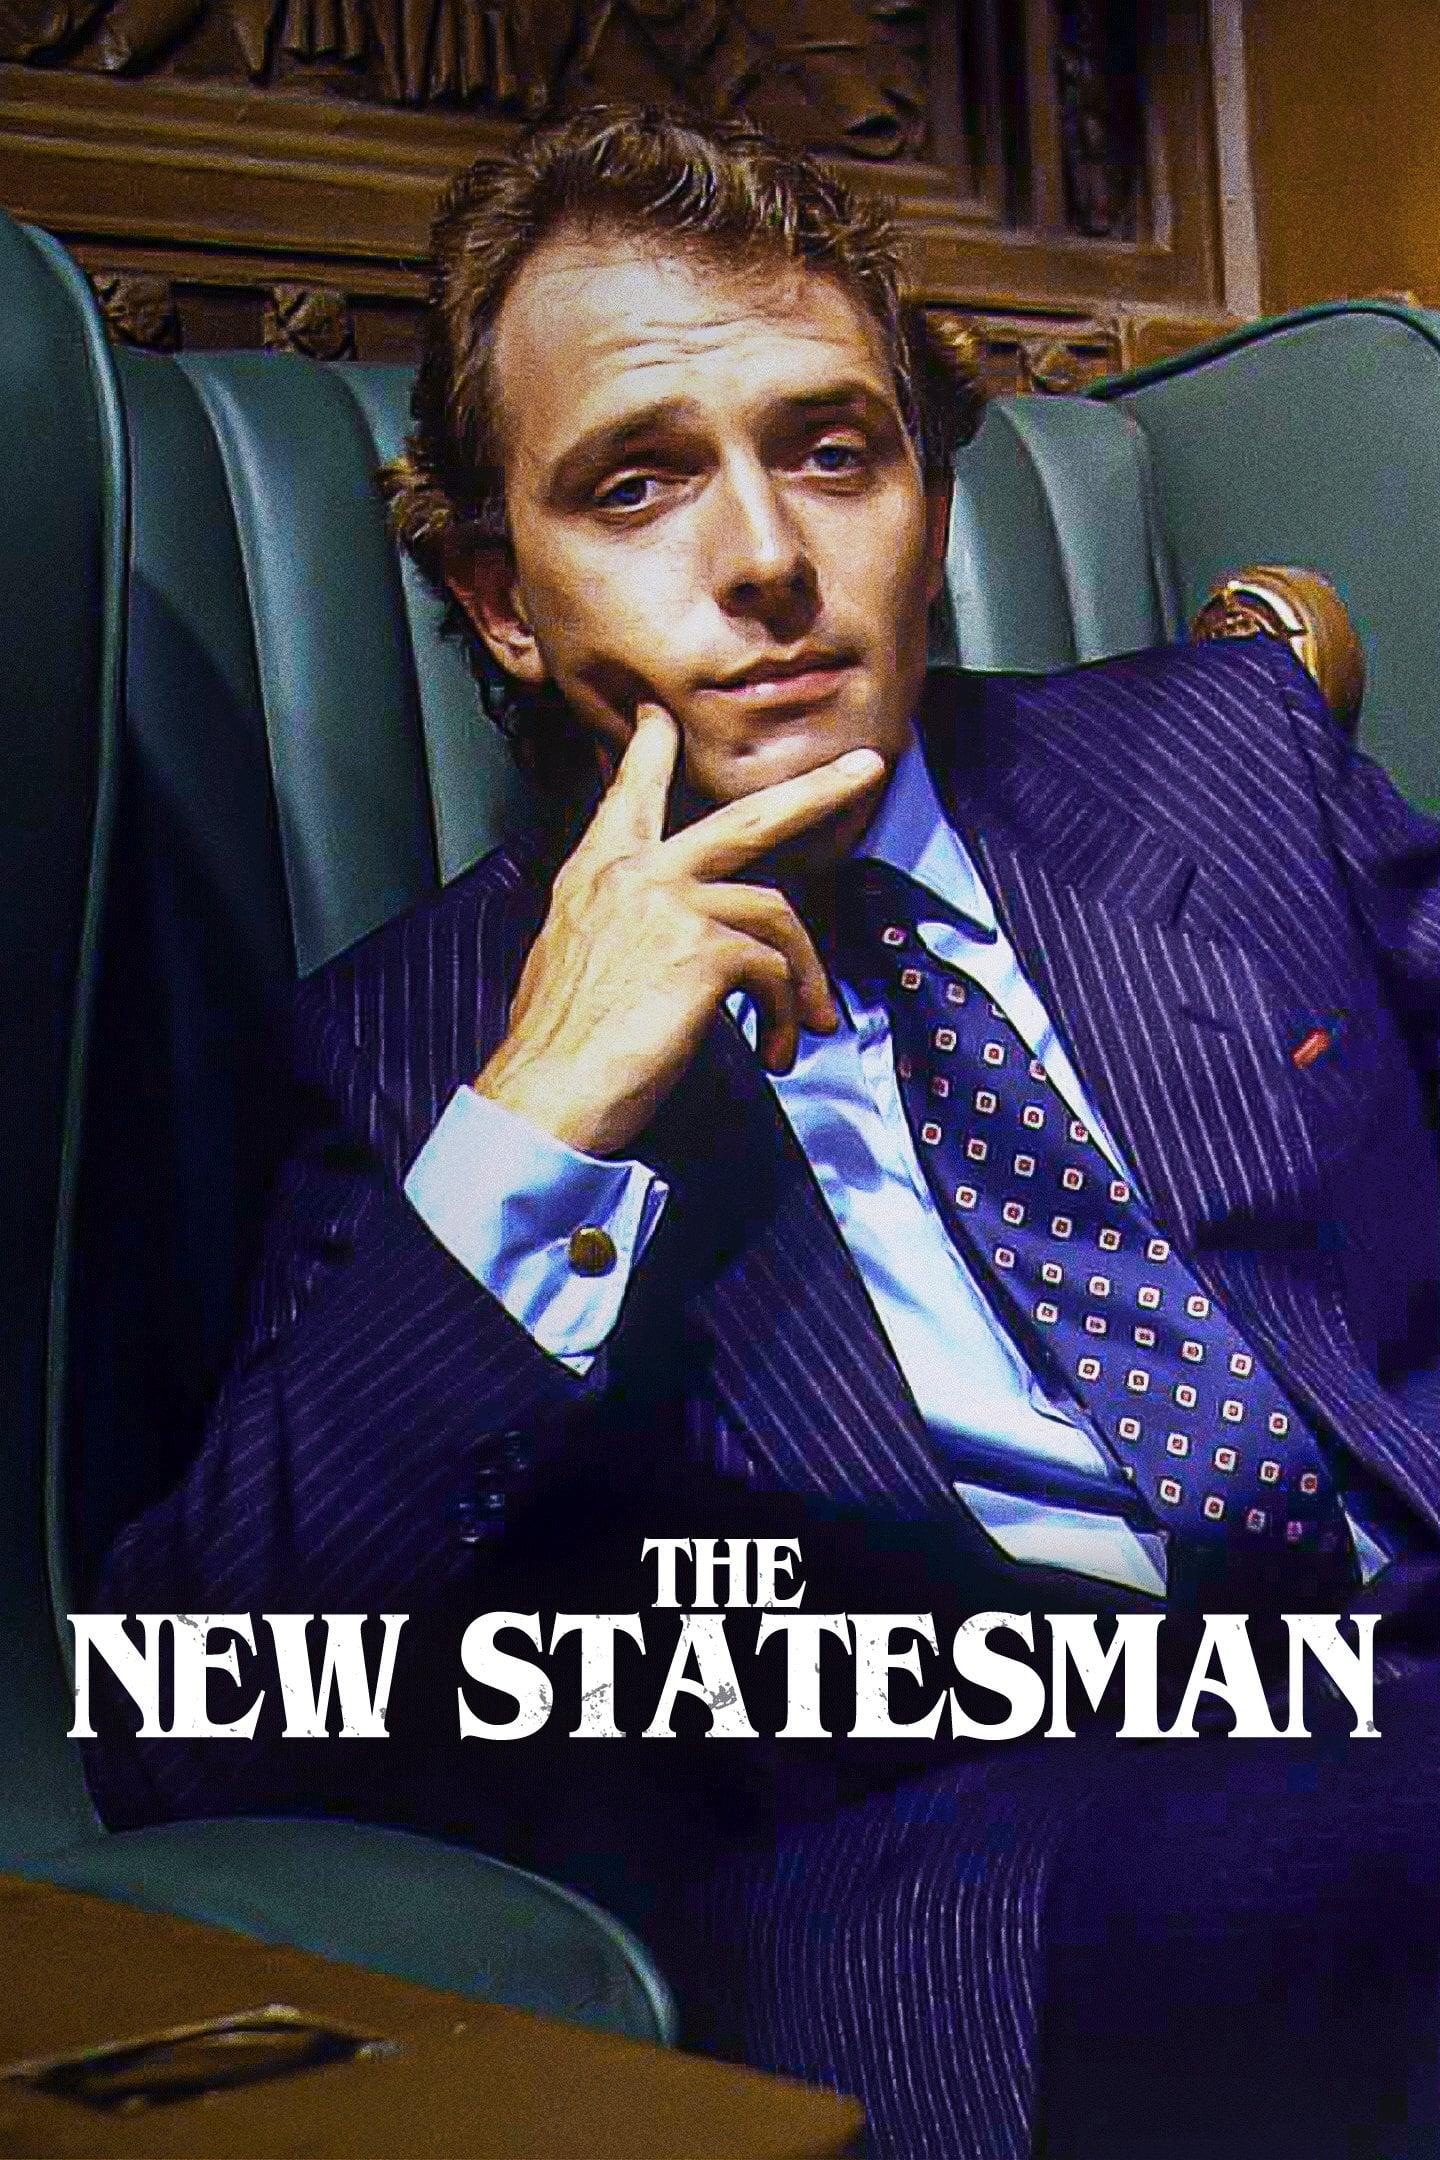 The New Statesman poster